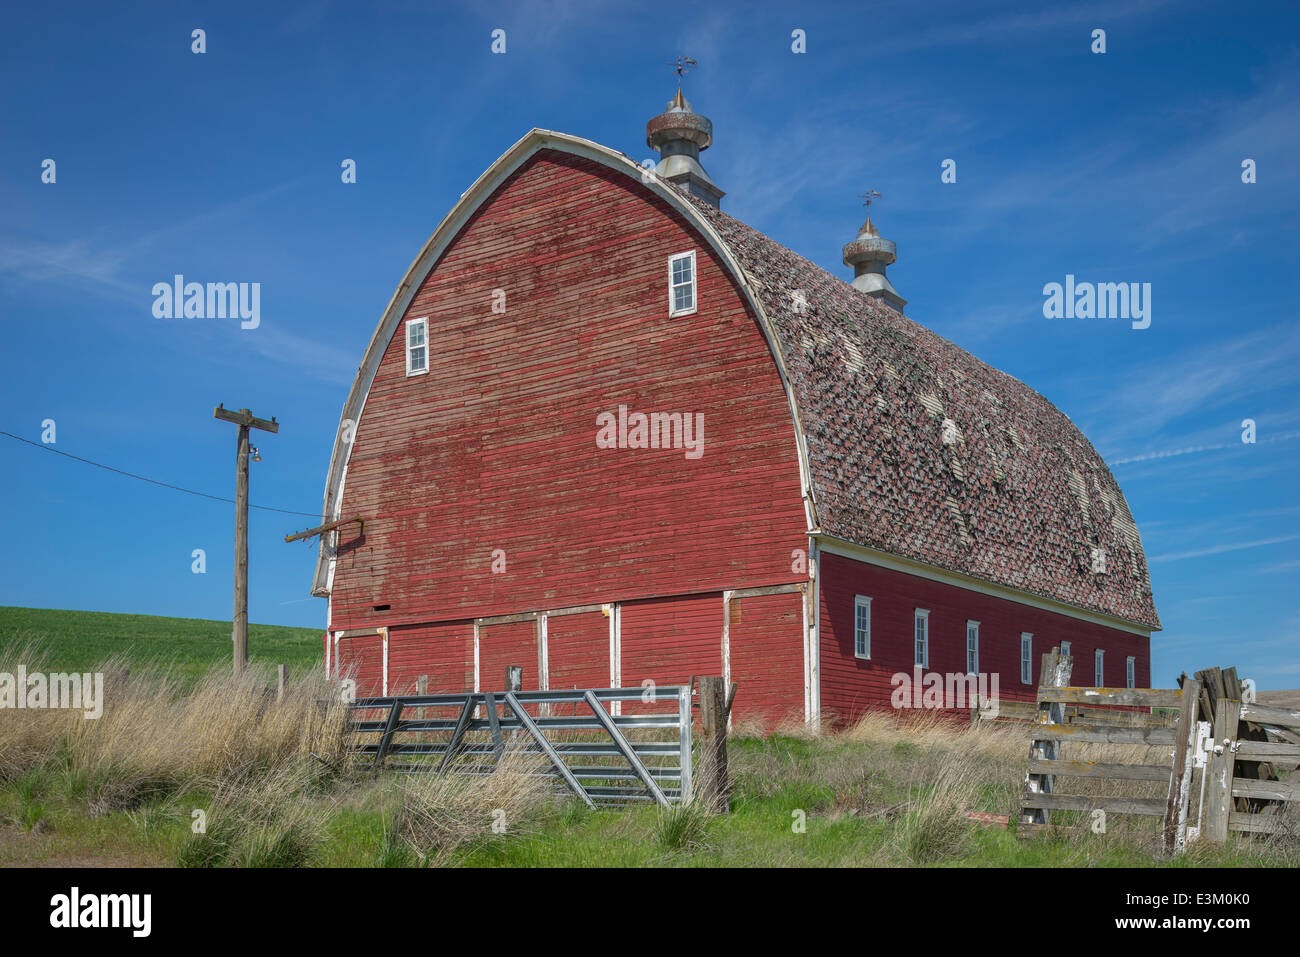 Palouse, Whitman County, Washington: Rote Scheune mit runden Dach Stockfoto